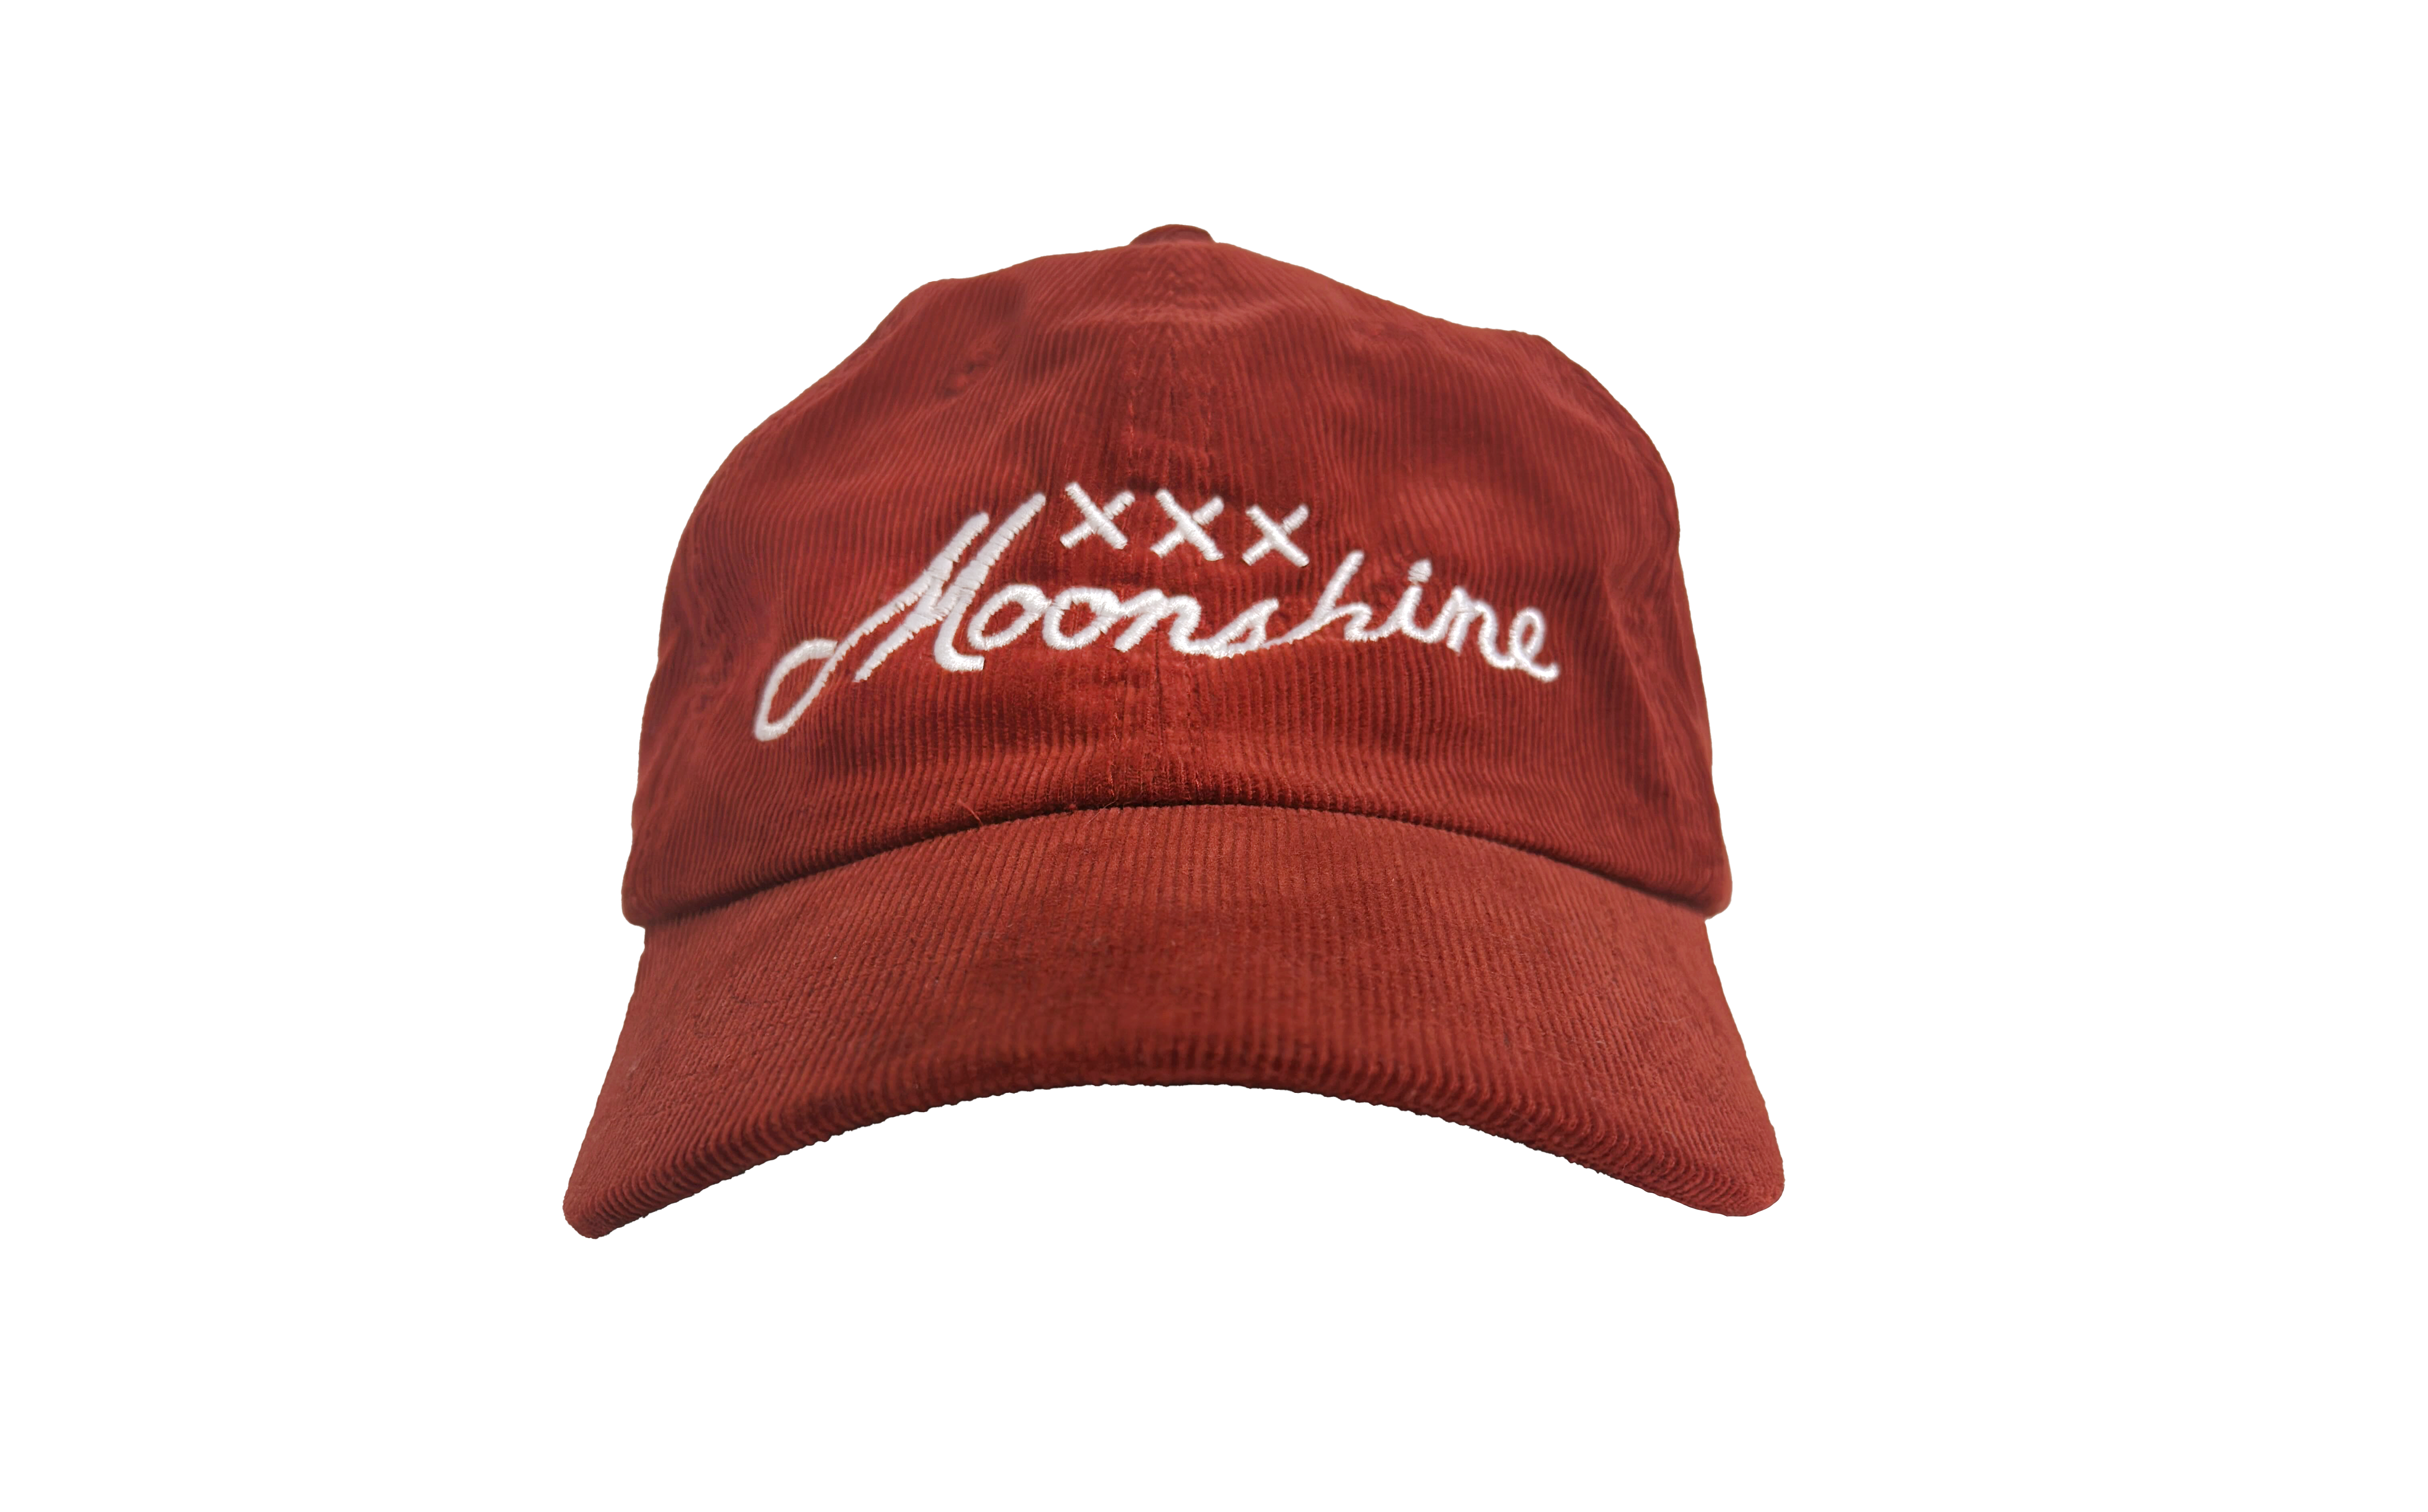 MOONSHINE BURGUNDY CORDUROY HAT